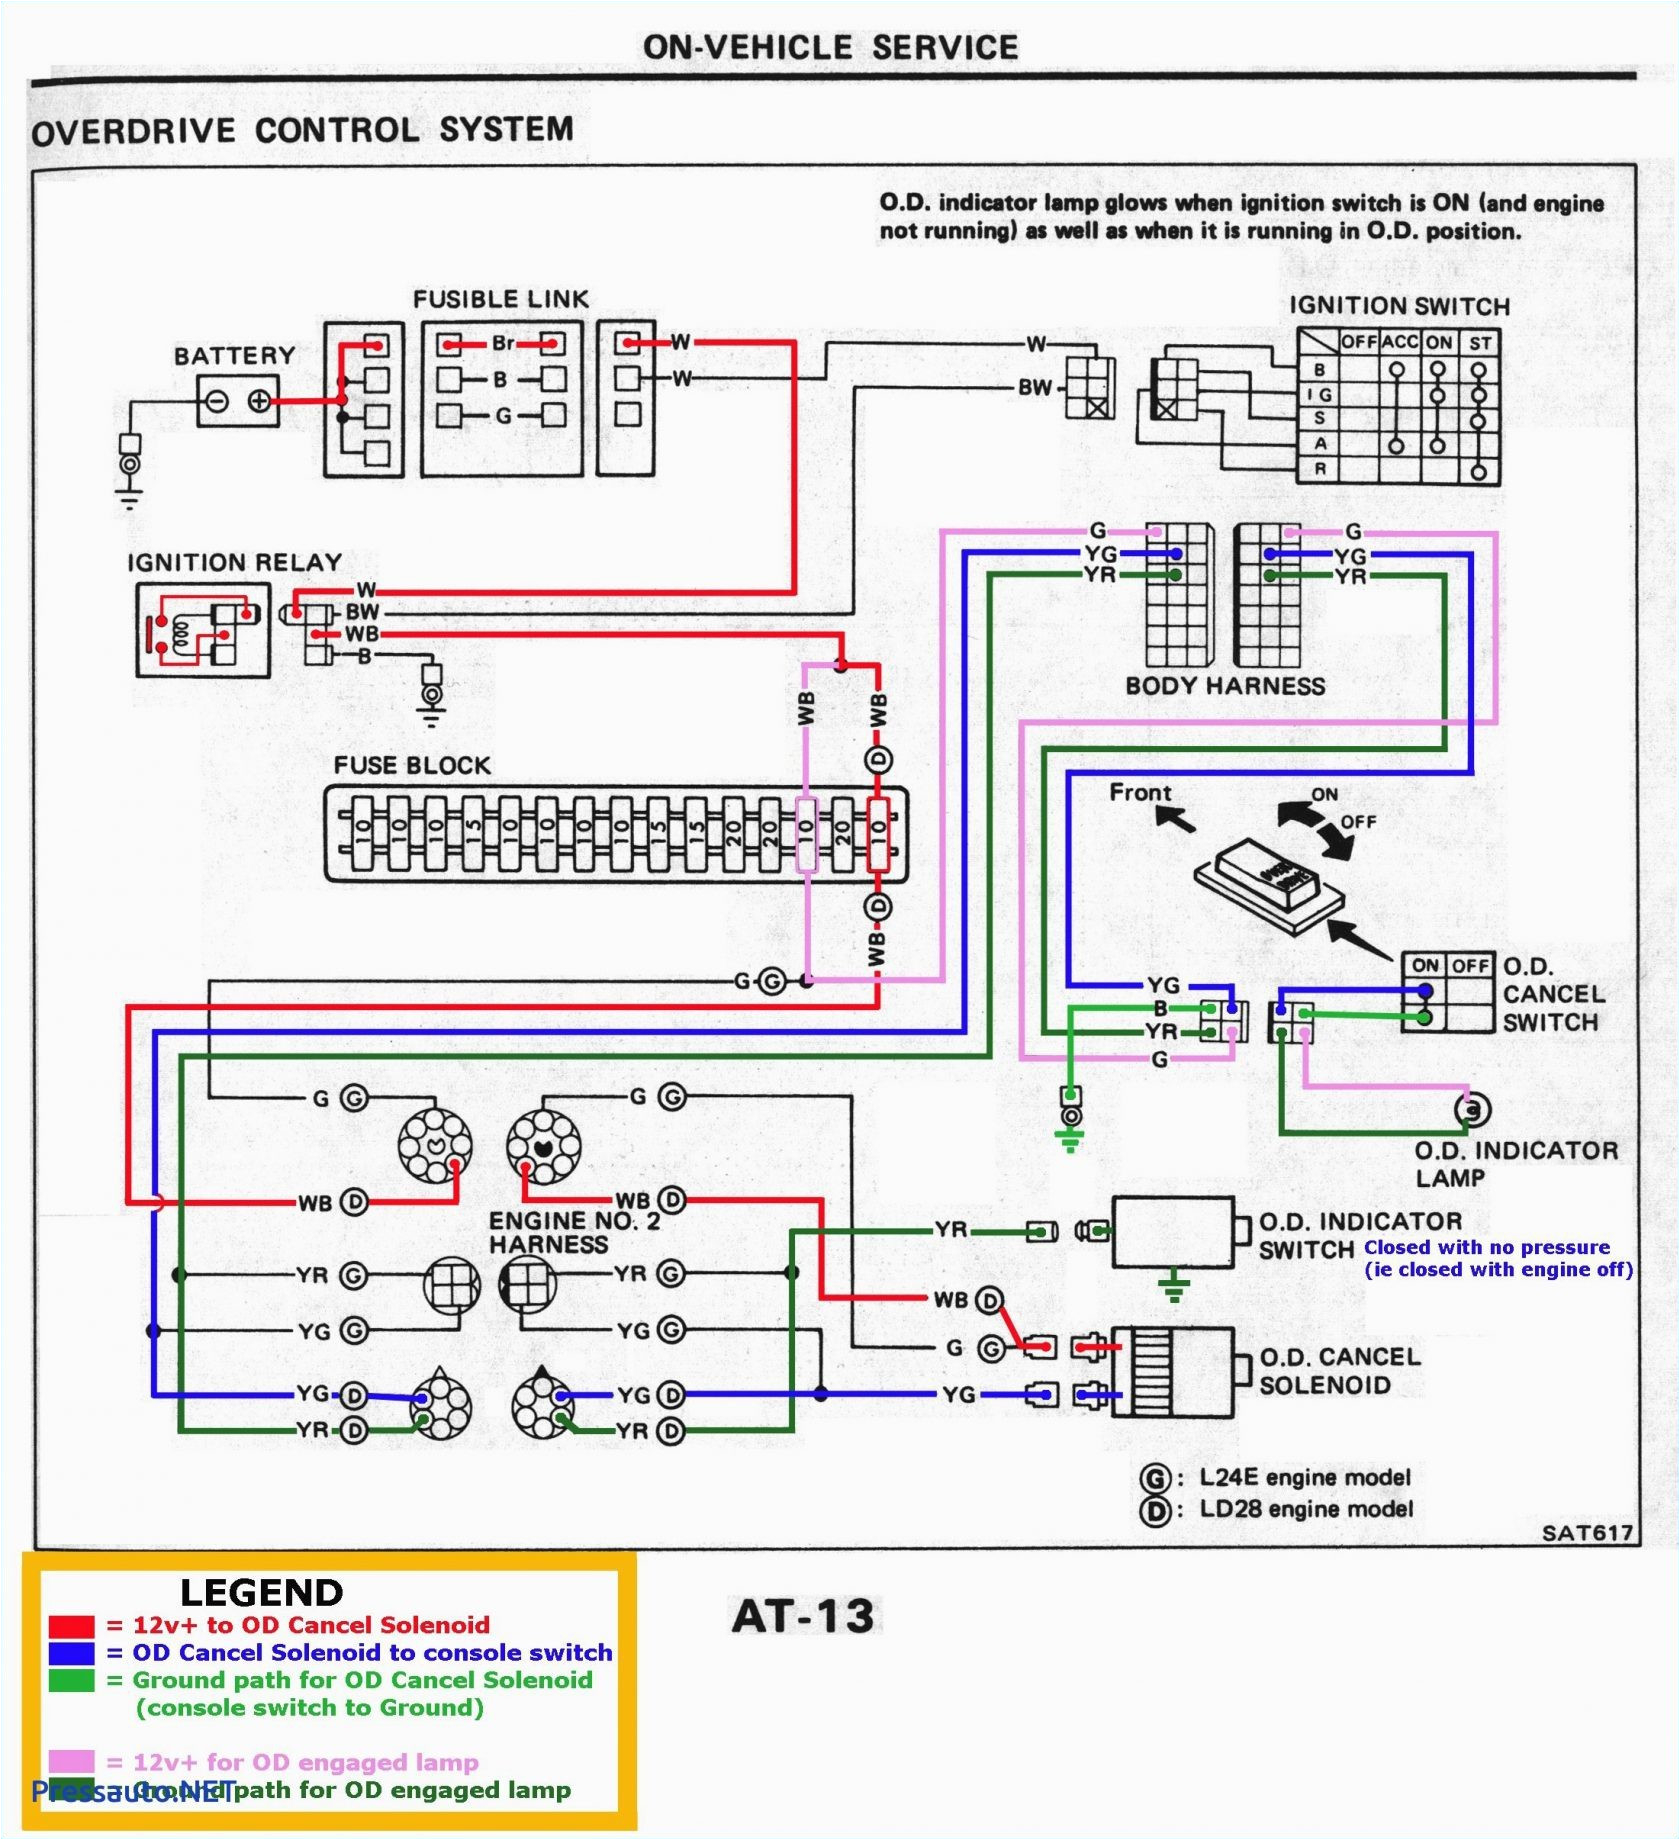 led 200 lights wiring diagram wiring diagram index 18 led and light circuit circuit diagram seekiccom